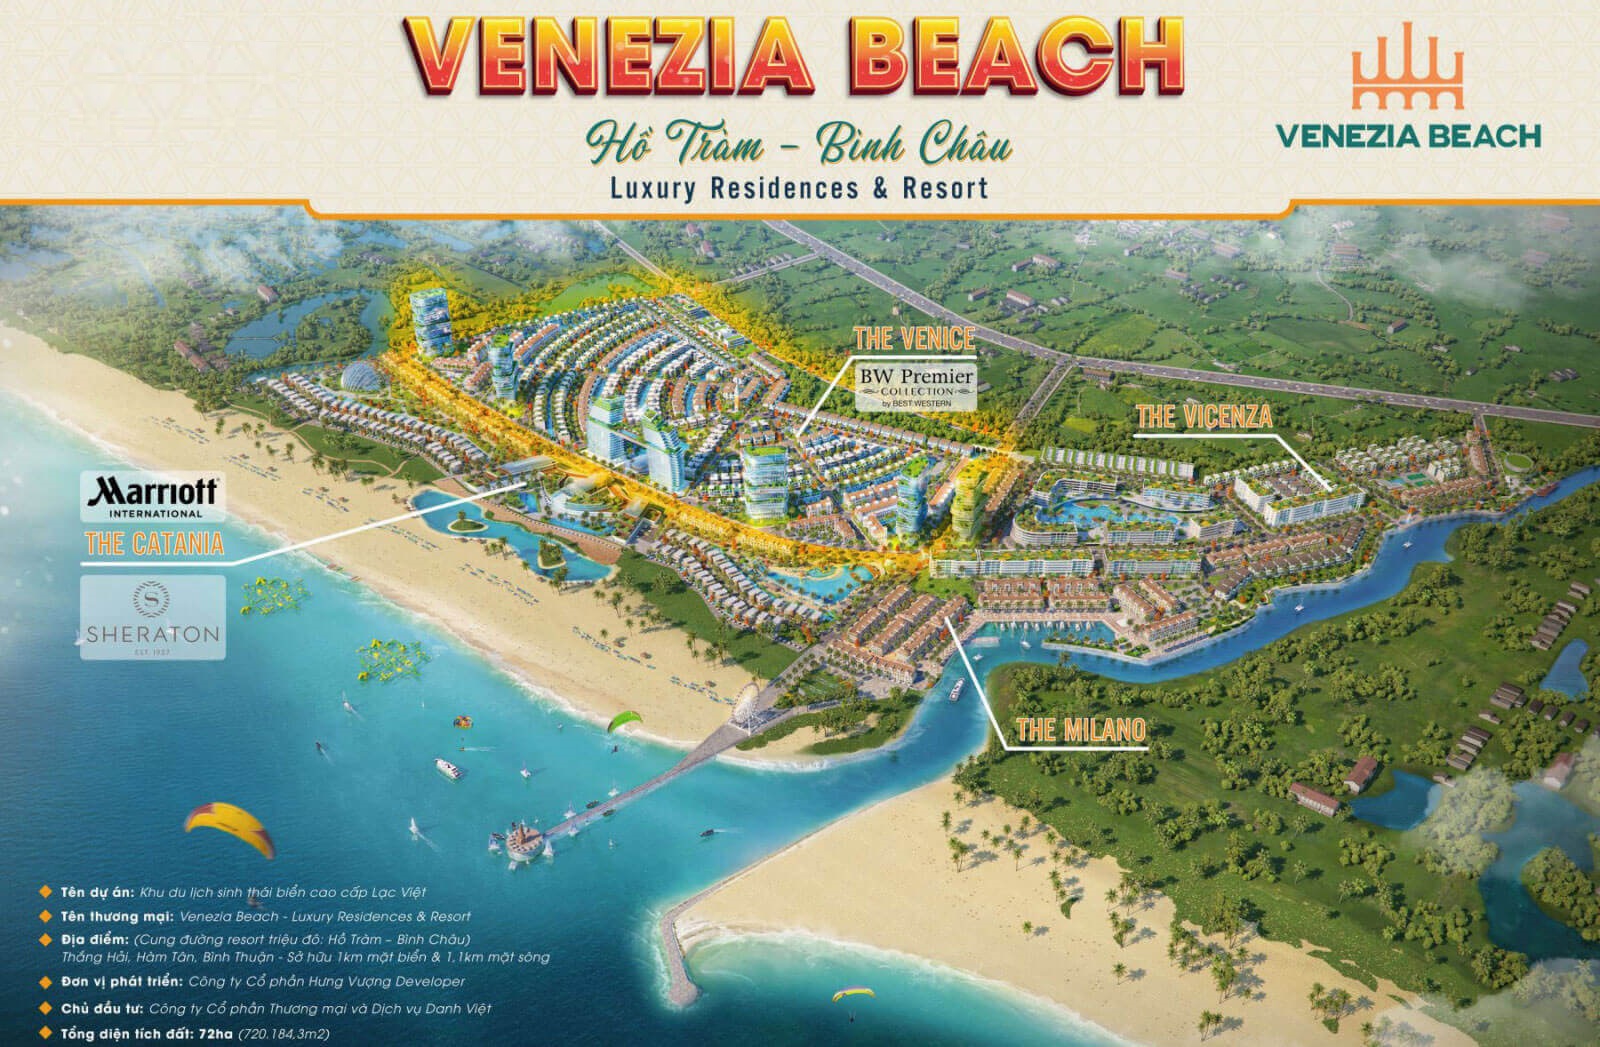 venezia beach village binh chau